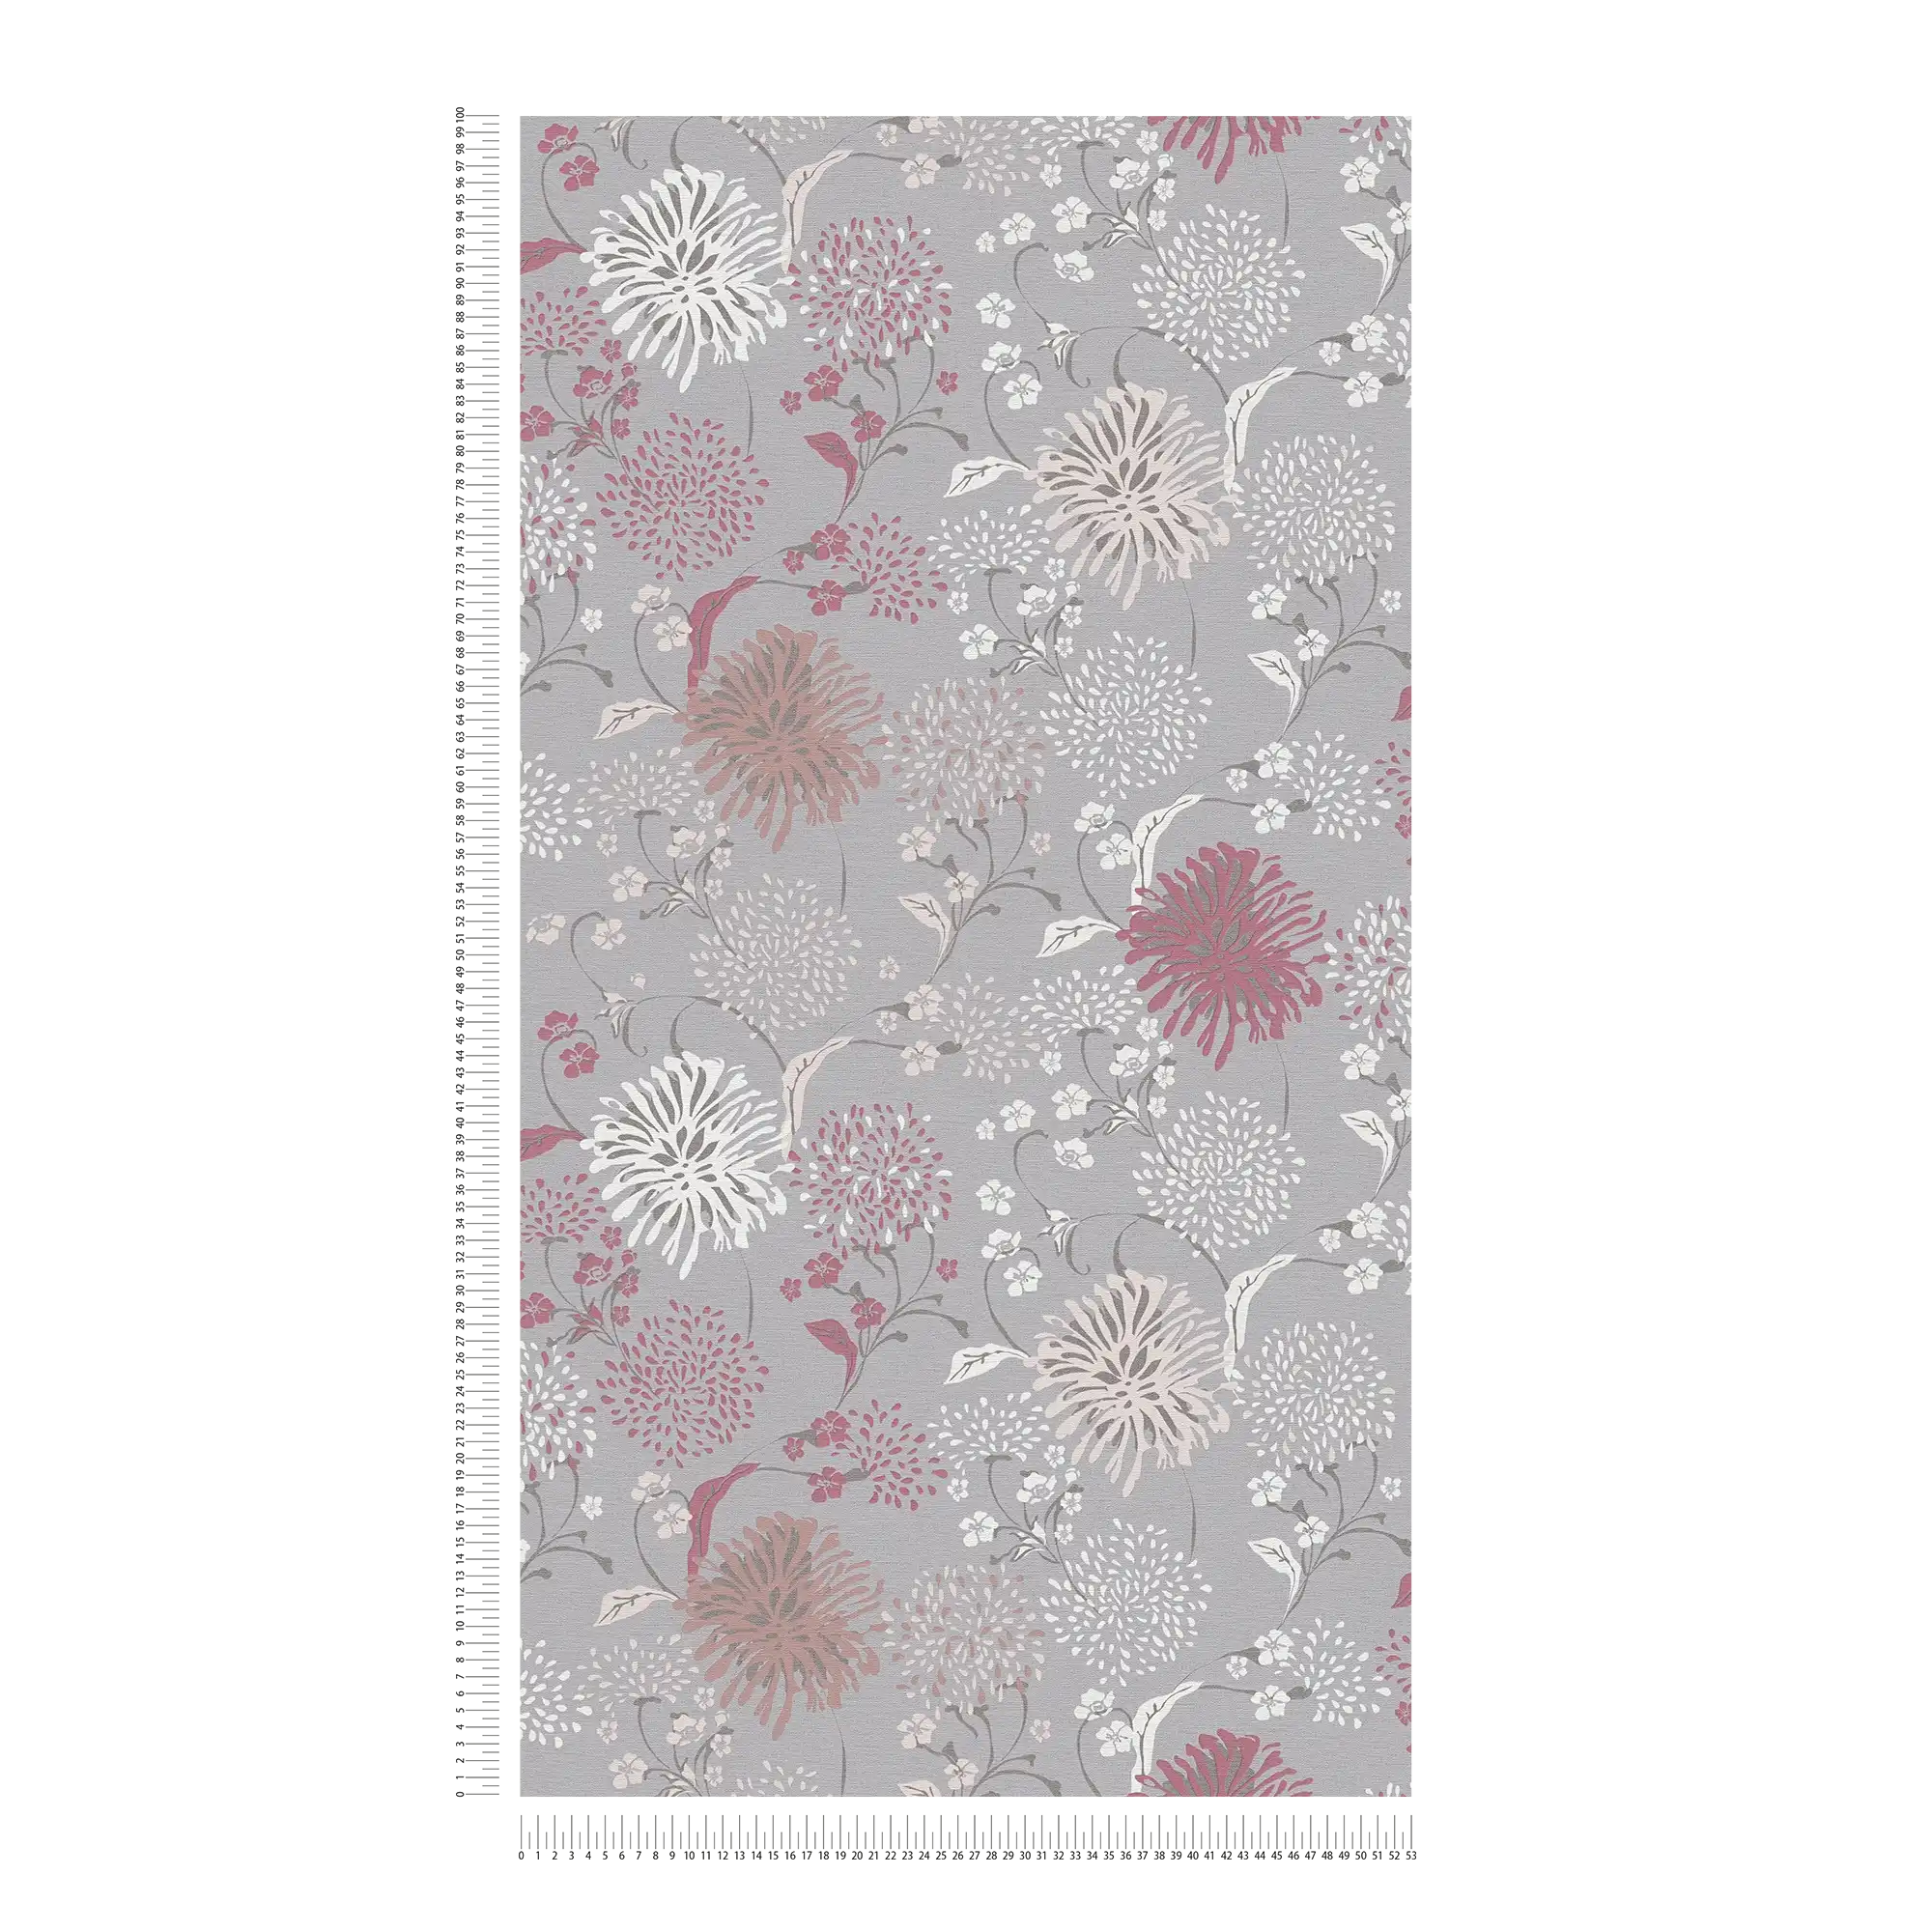             Dandelion wallpaper with fine linen look - grey, white, red
        